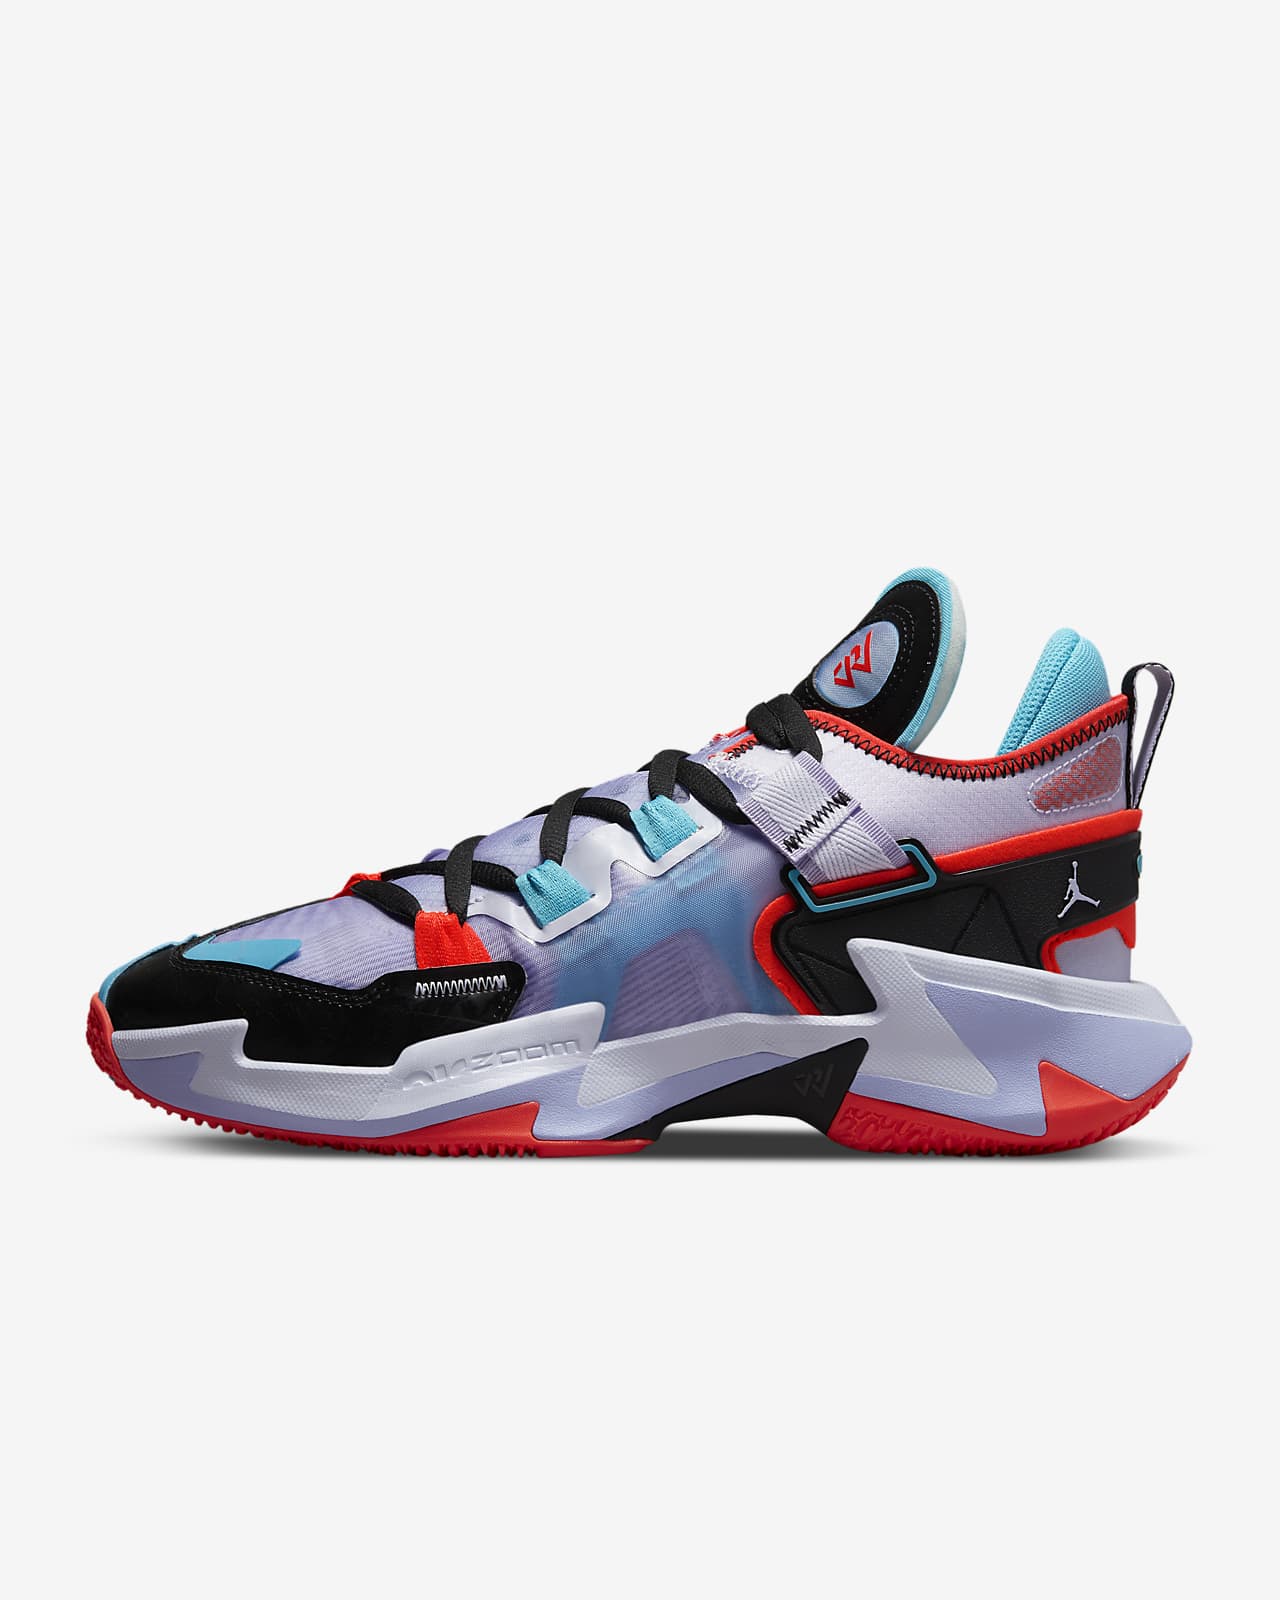 Jordan .5 'Why Not?' Men's Basketball Shoes